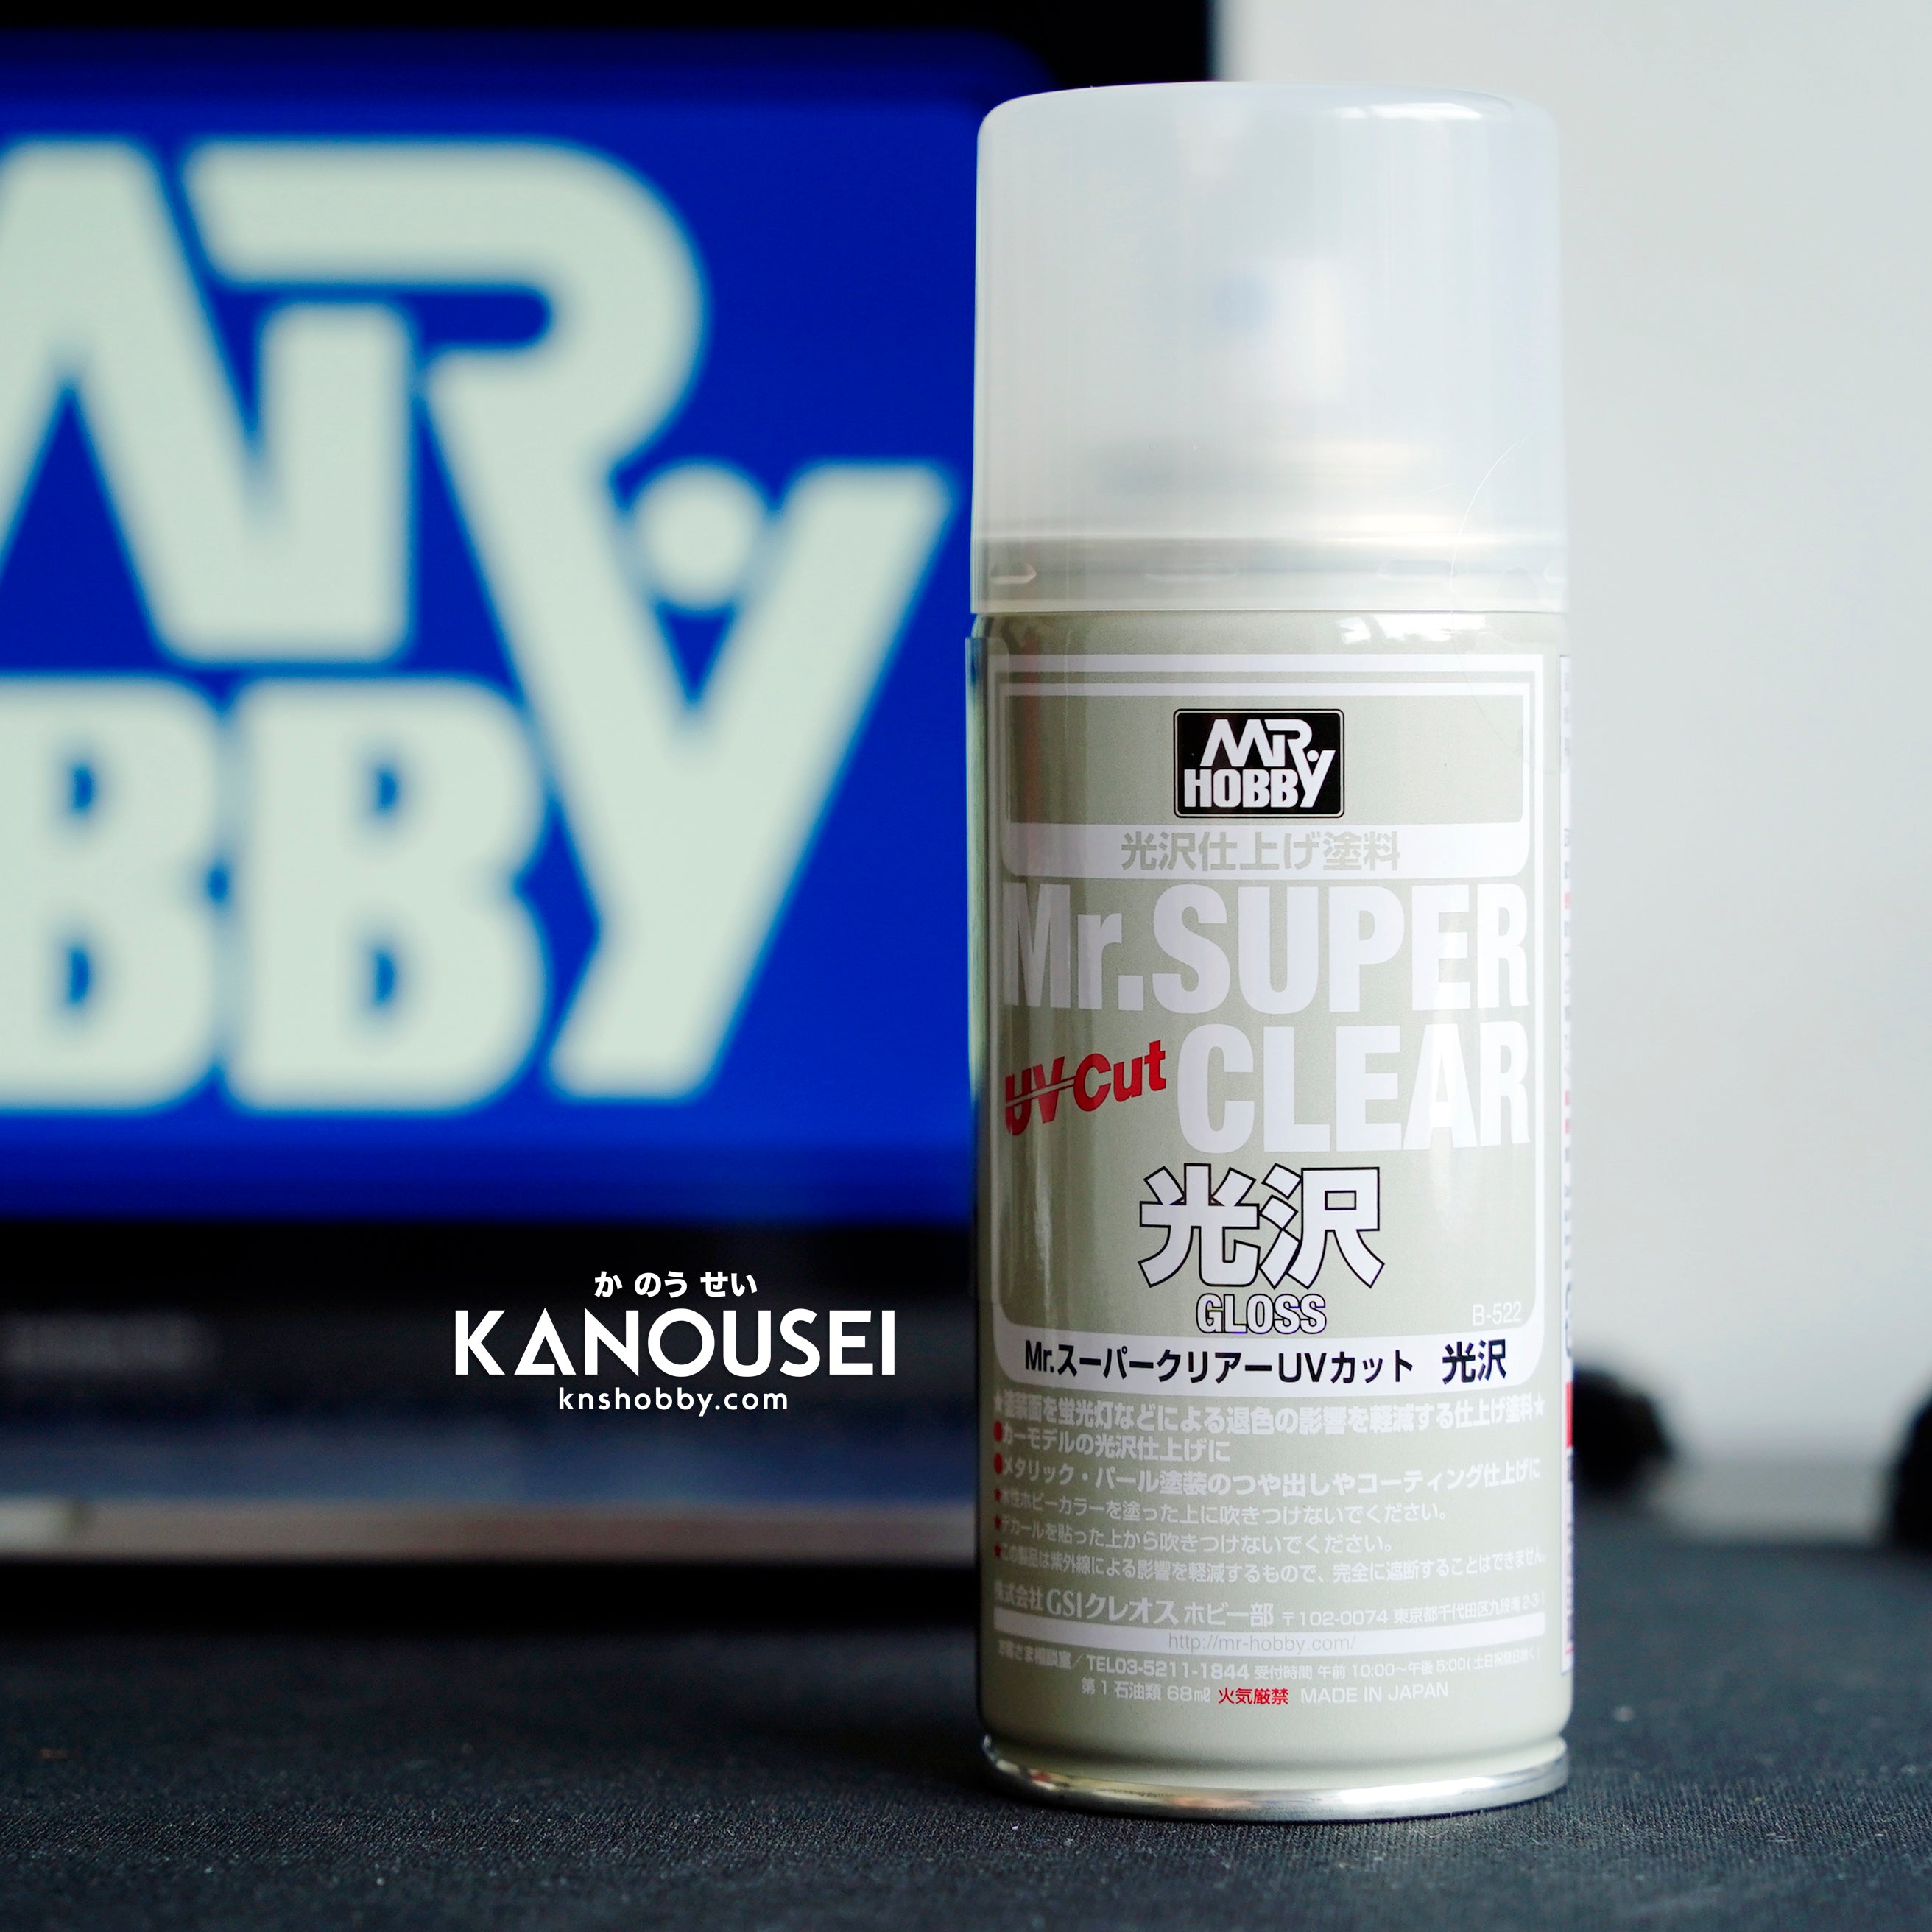 B513 - Mr. Super Clear Gloss Spray Can - Hub Hobby